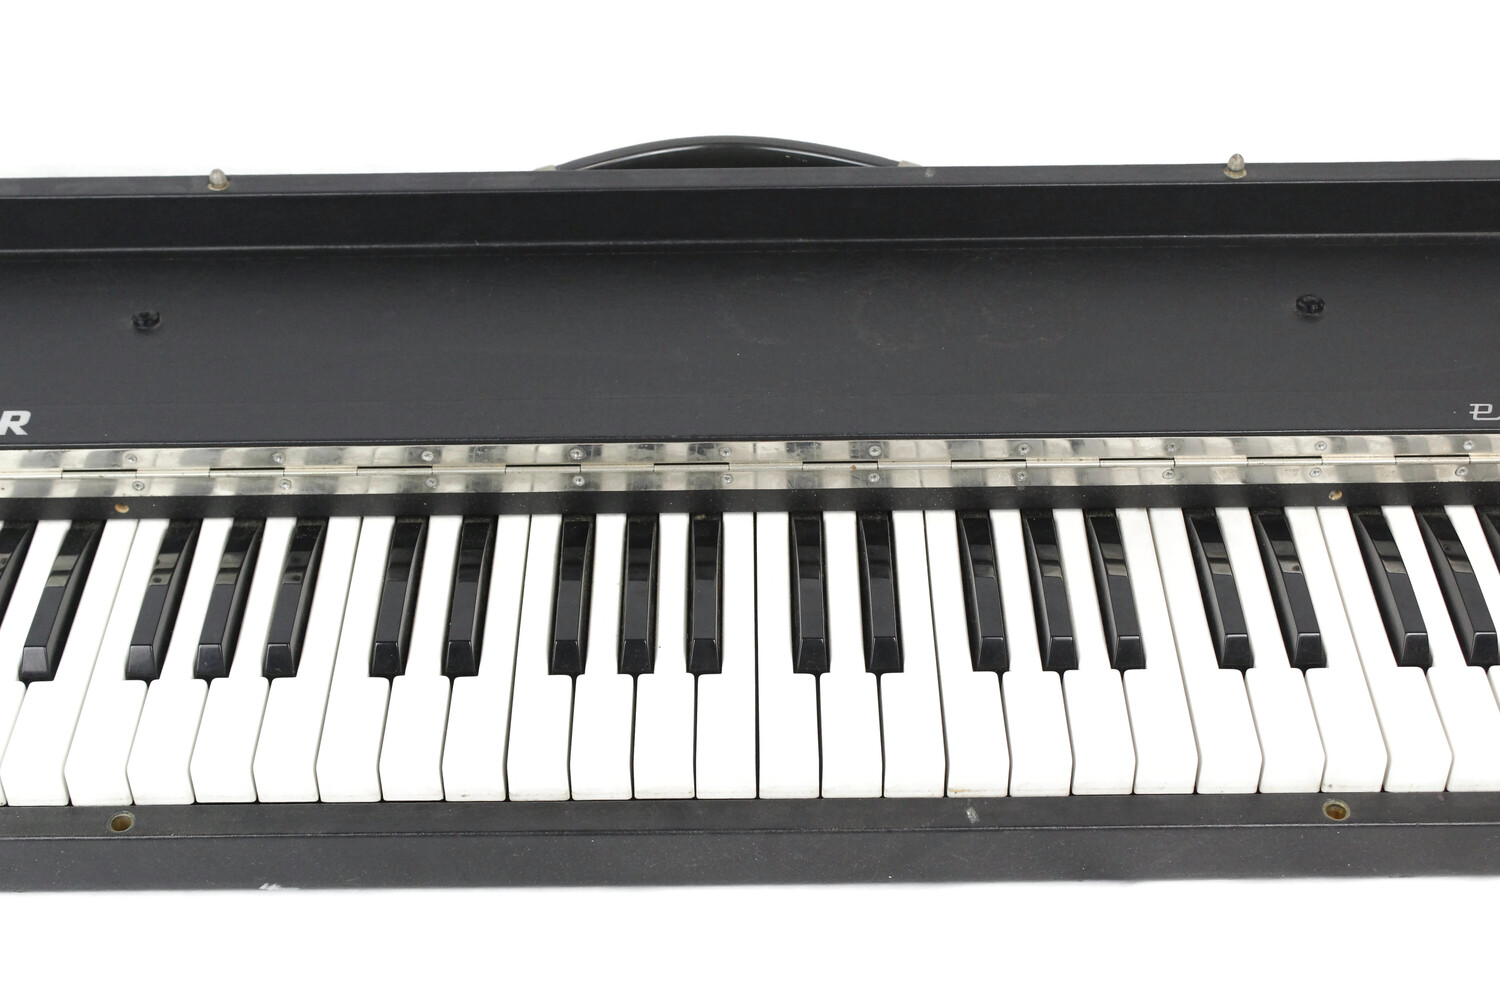 Vintage Honer Pianet T Electro - Mechanical Piano Keyboard Suitcase Portable Key